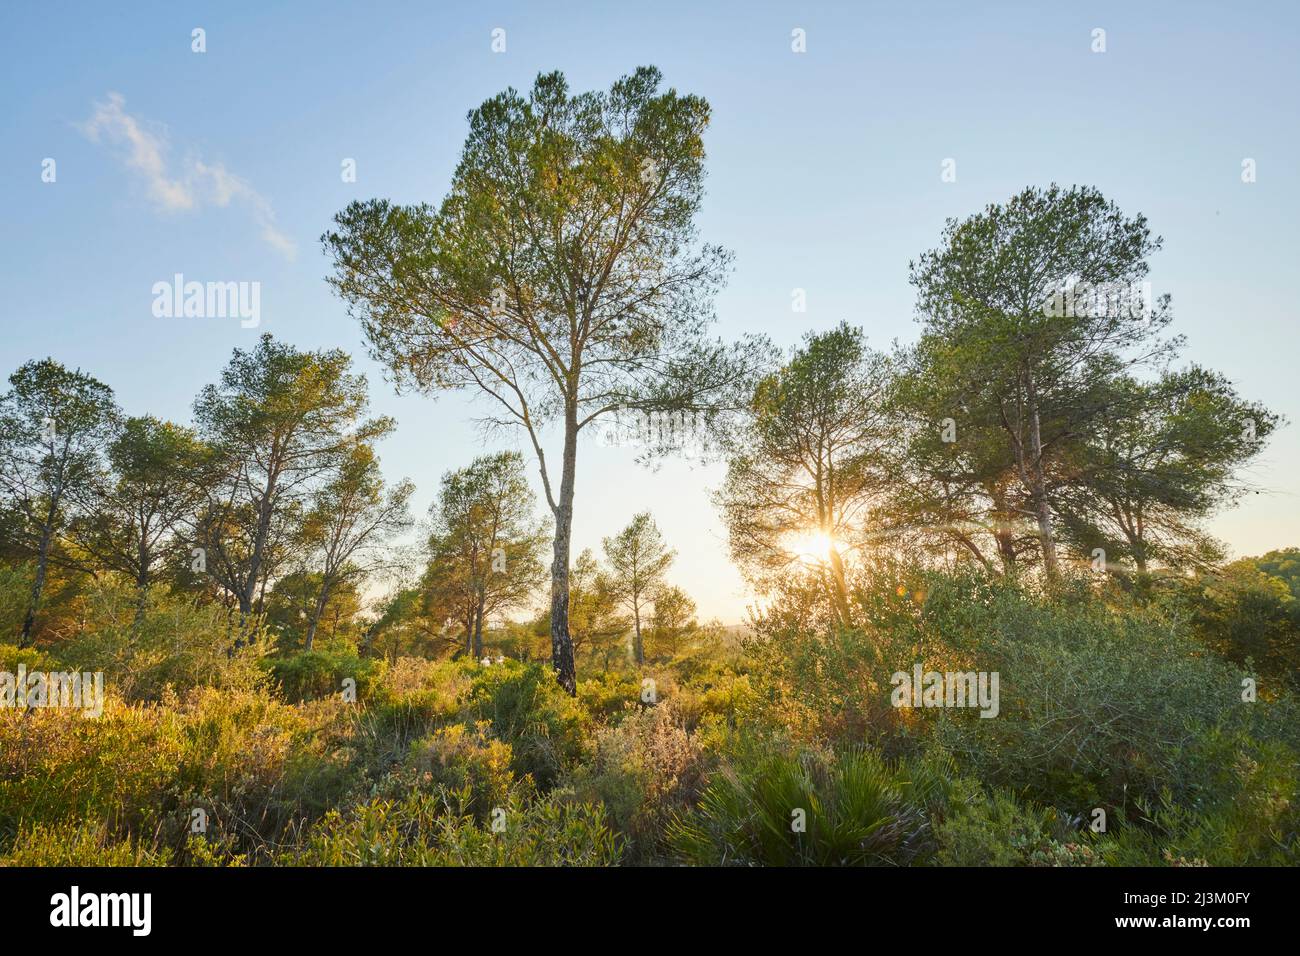 Austrian pine or black pine (Pinus nigra) trees at sunset; Catalonia, Spain Stock Photo